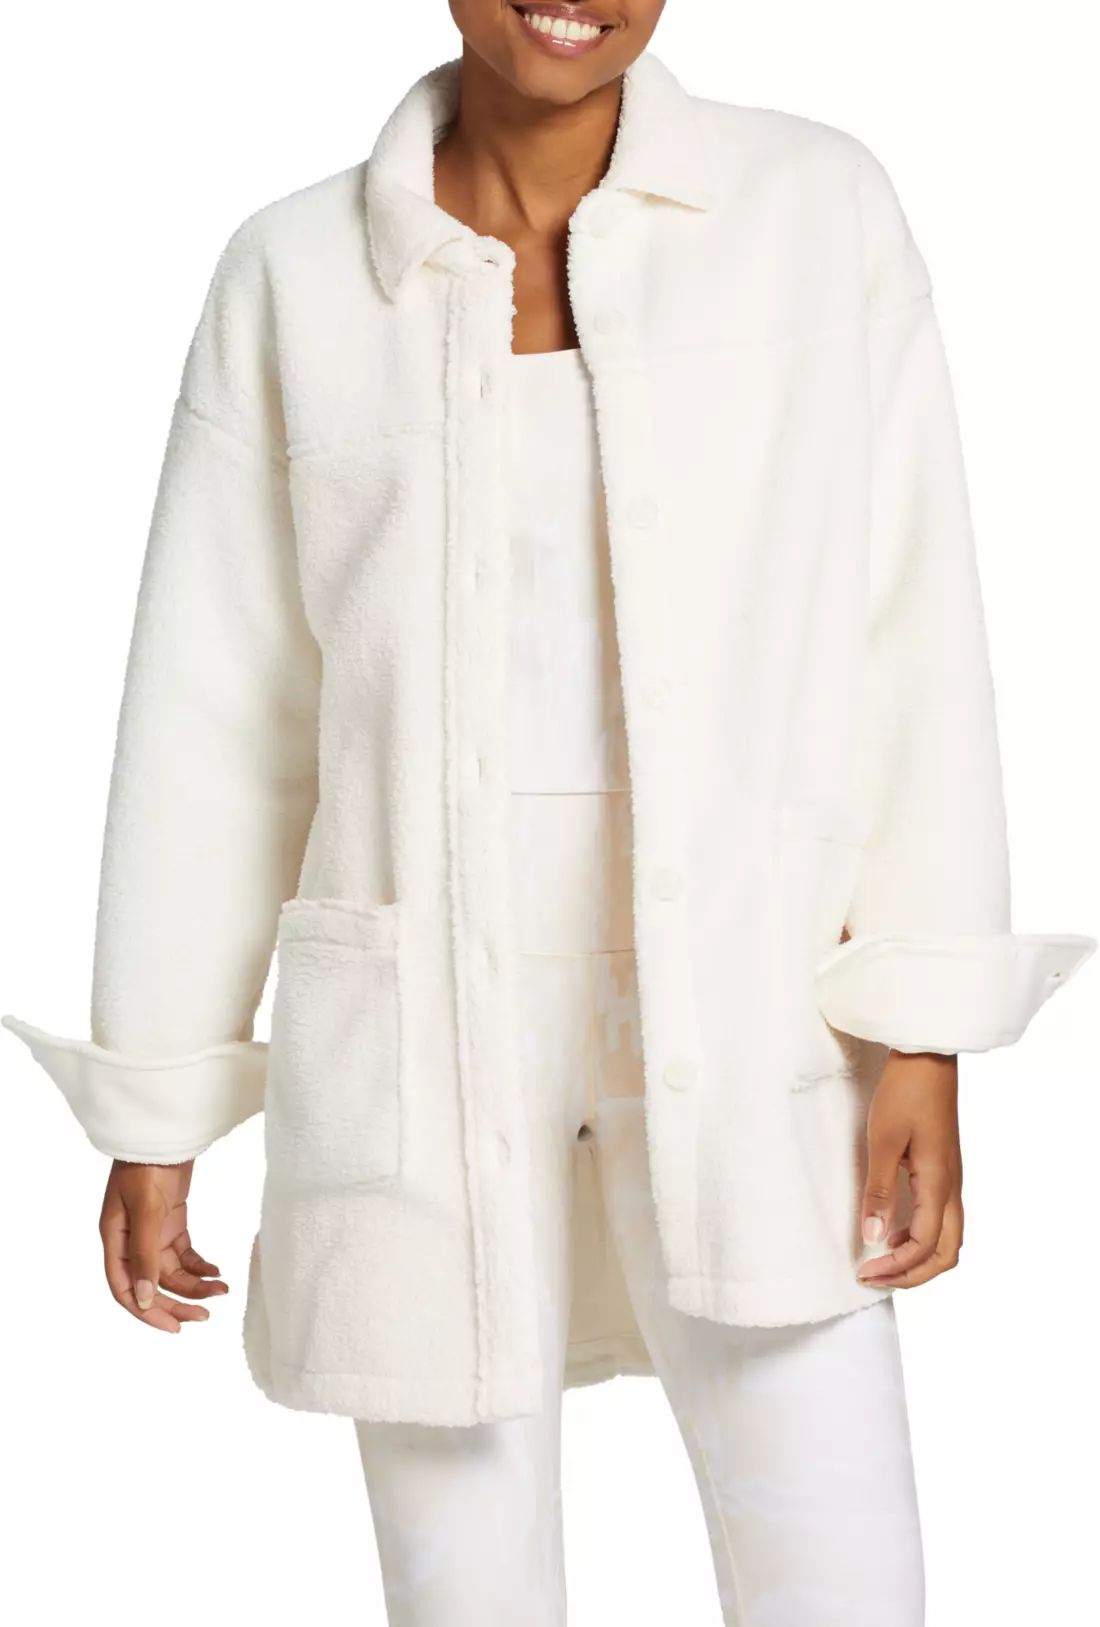 DSG X TWITCH + ALLISON Women's Polar Fleece Shirt Jacket | Dick's Sporting Goods | Dick's Sporting Goods